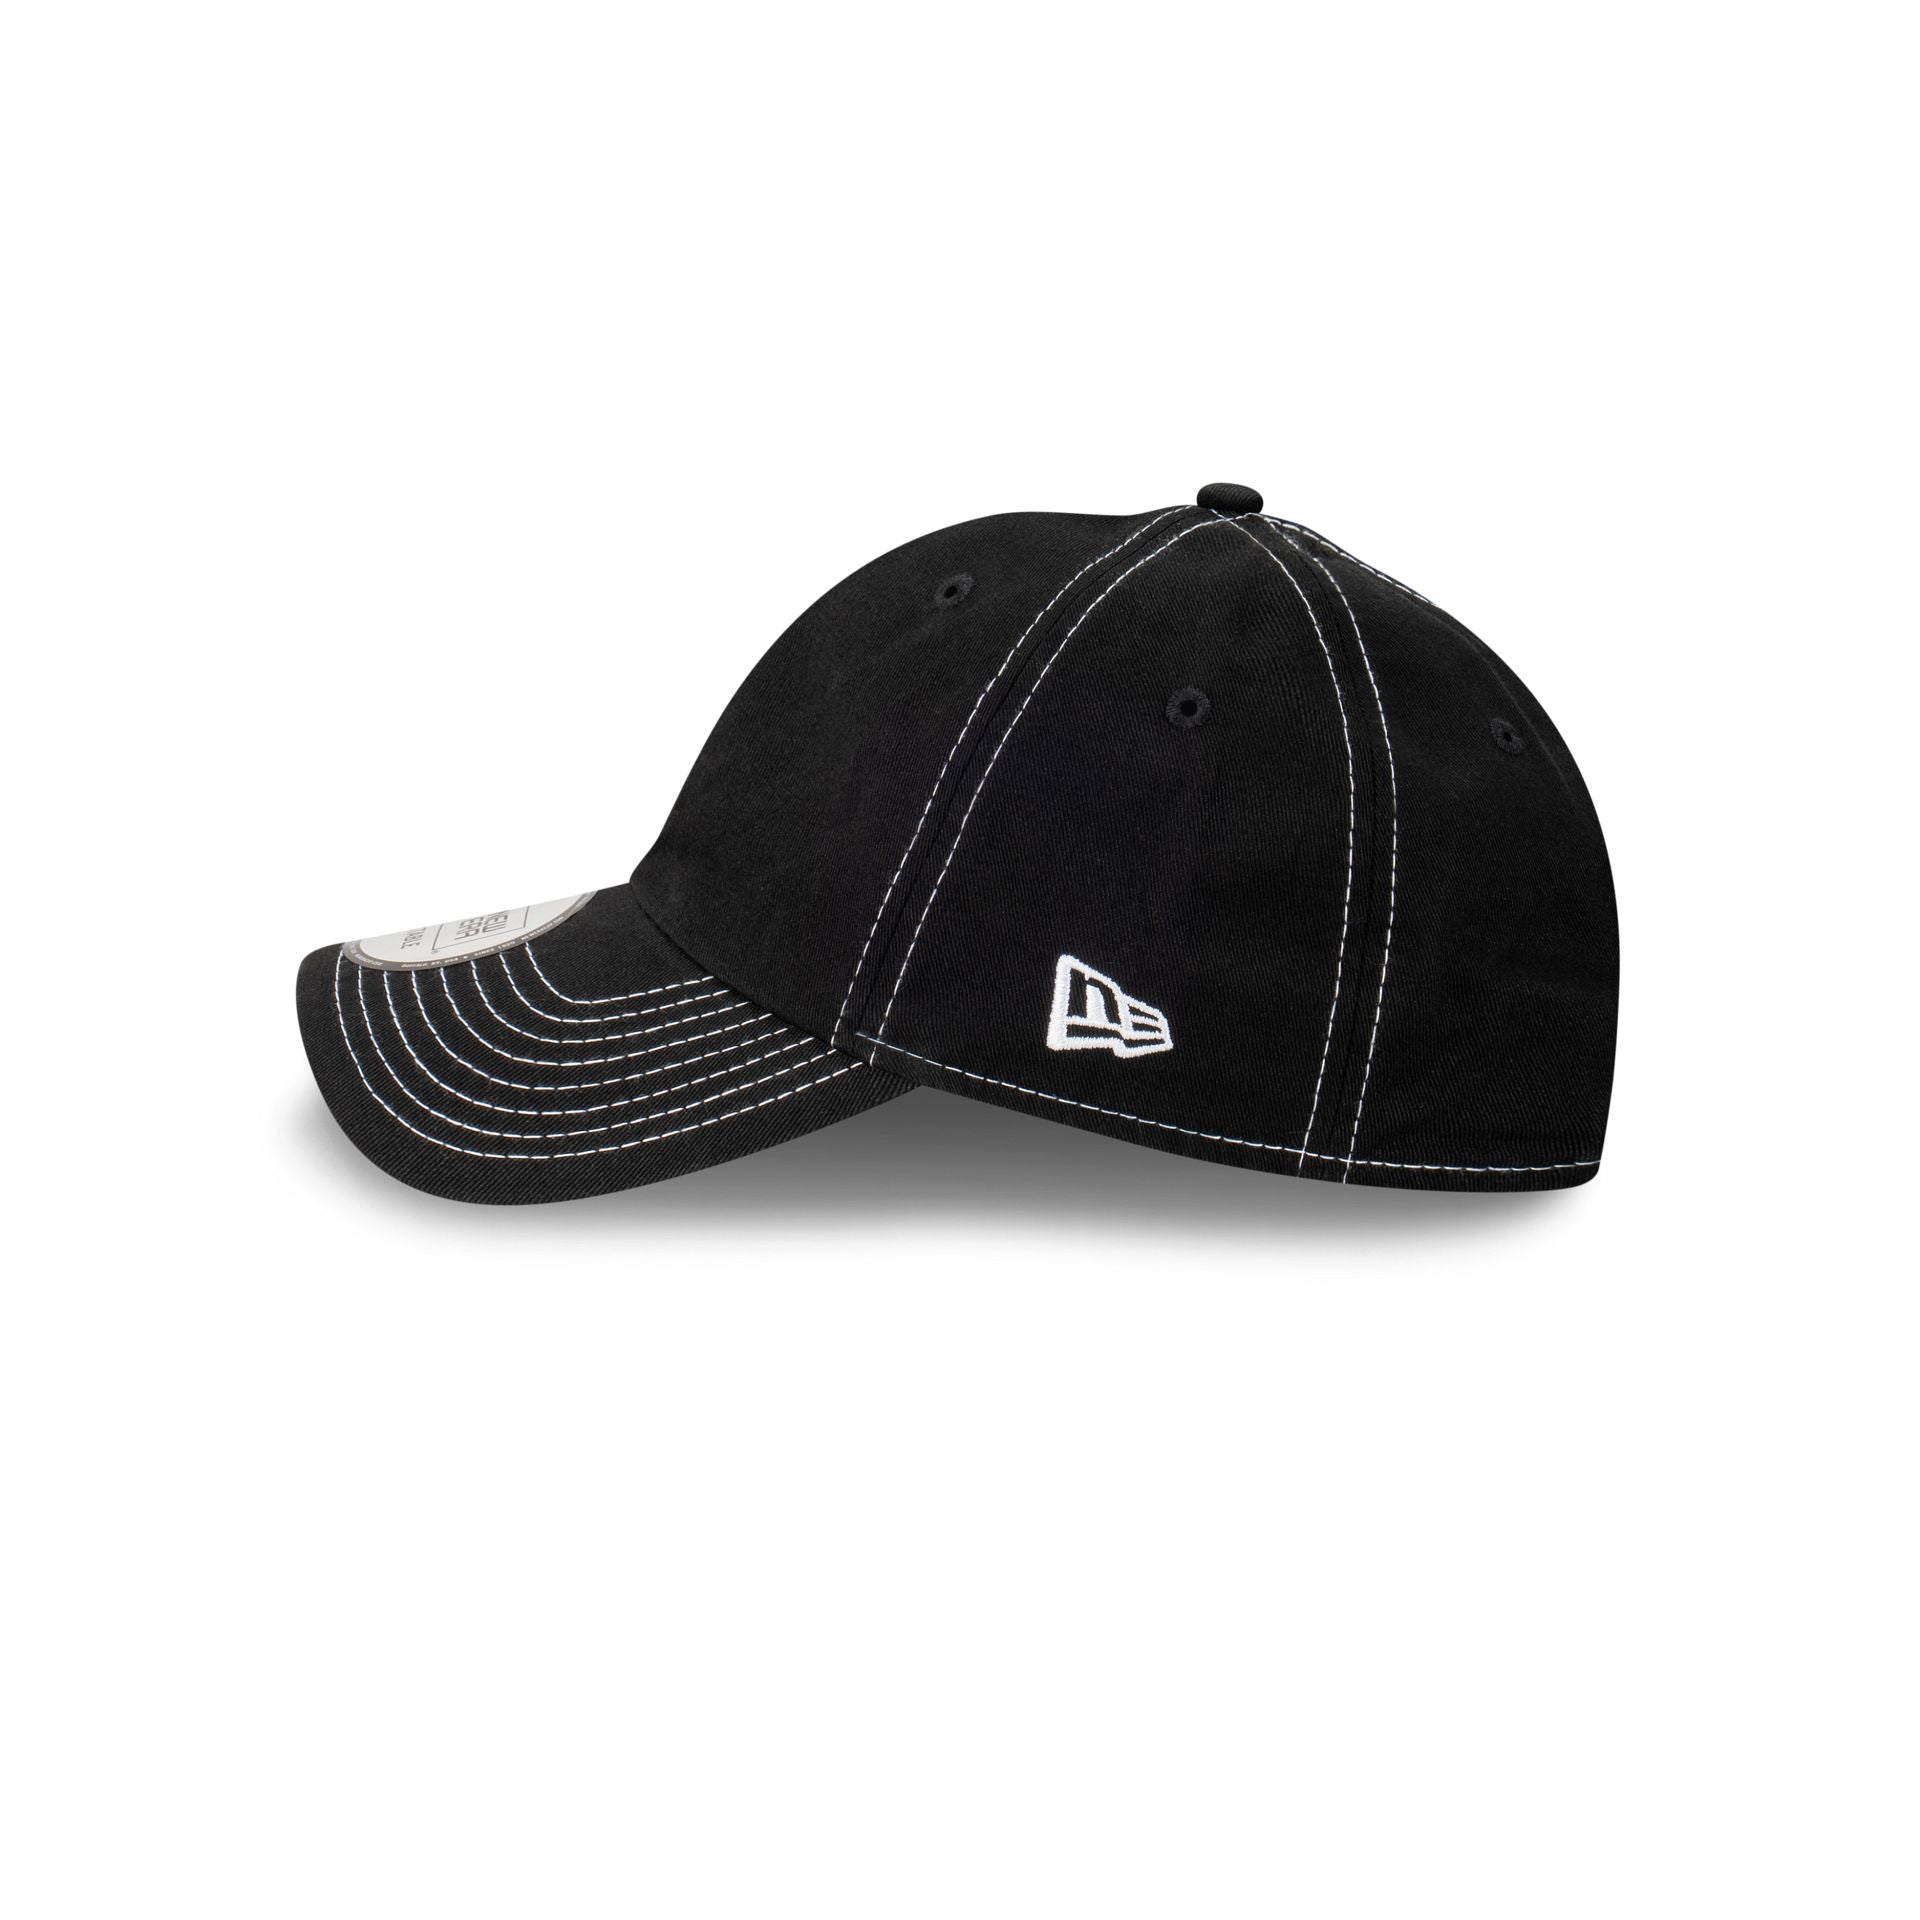 New Era Branded Contrast Black Casual Classic Hat – New Era Cap 